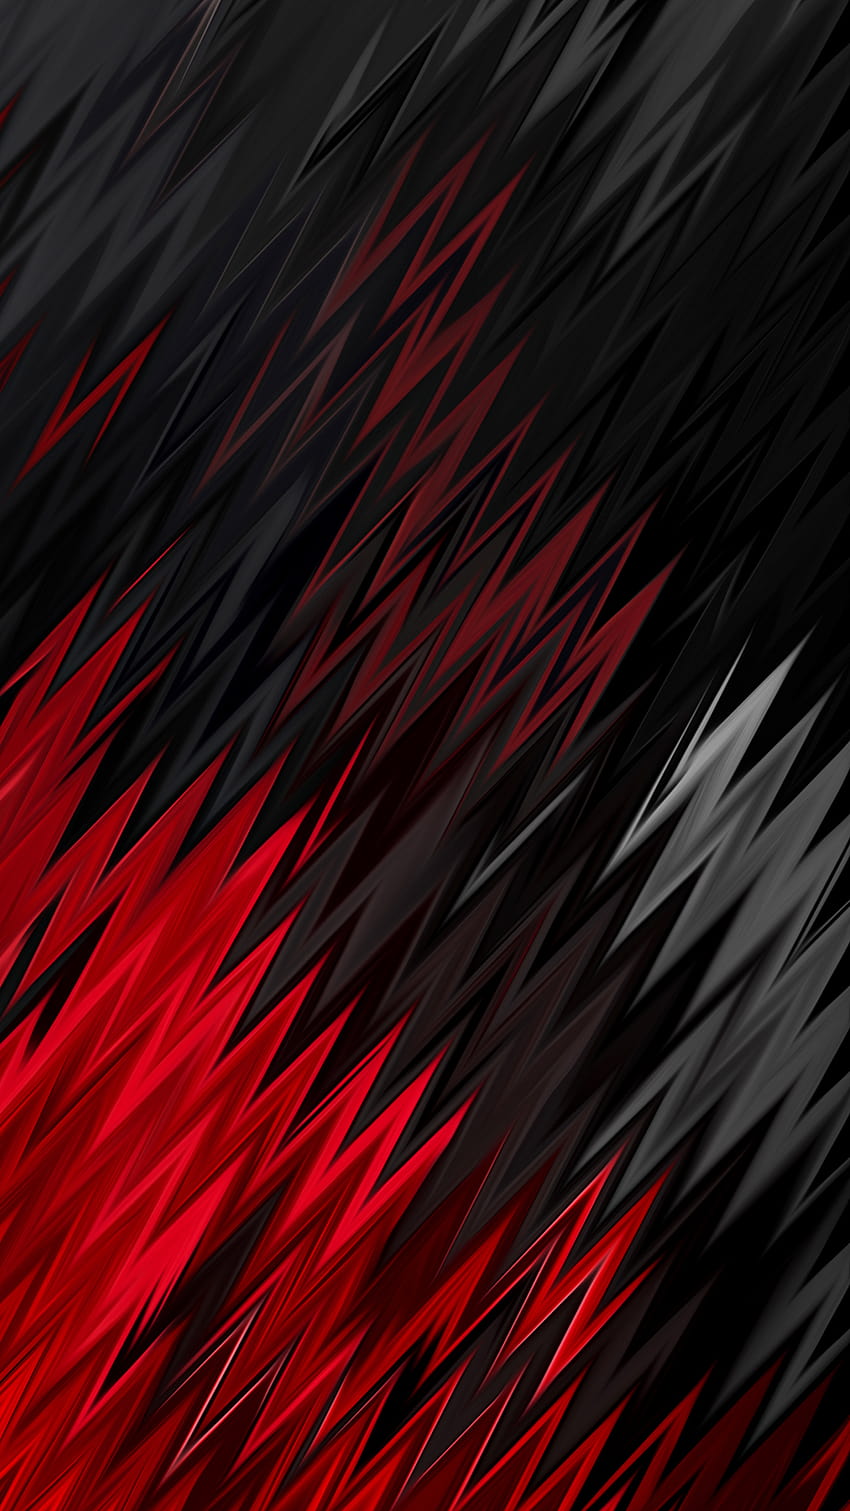 1080x1920 Rojo Negro Formas afiladas Iphone 7,6s,6 Plus, Pixel xl, One Plus 3,3t,5, s y píxeles negros fondo de pantalla del teléfono